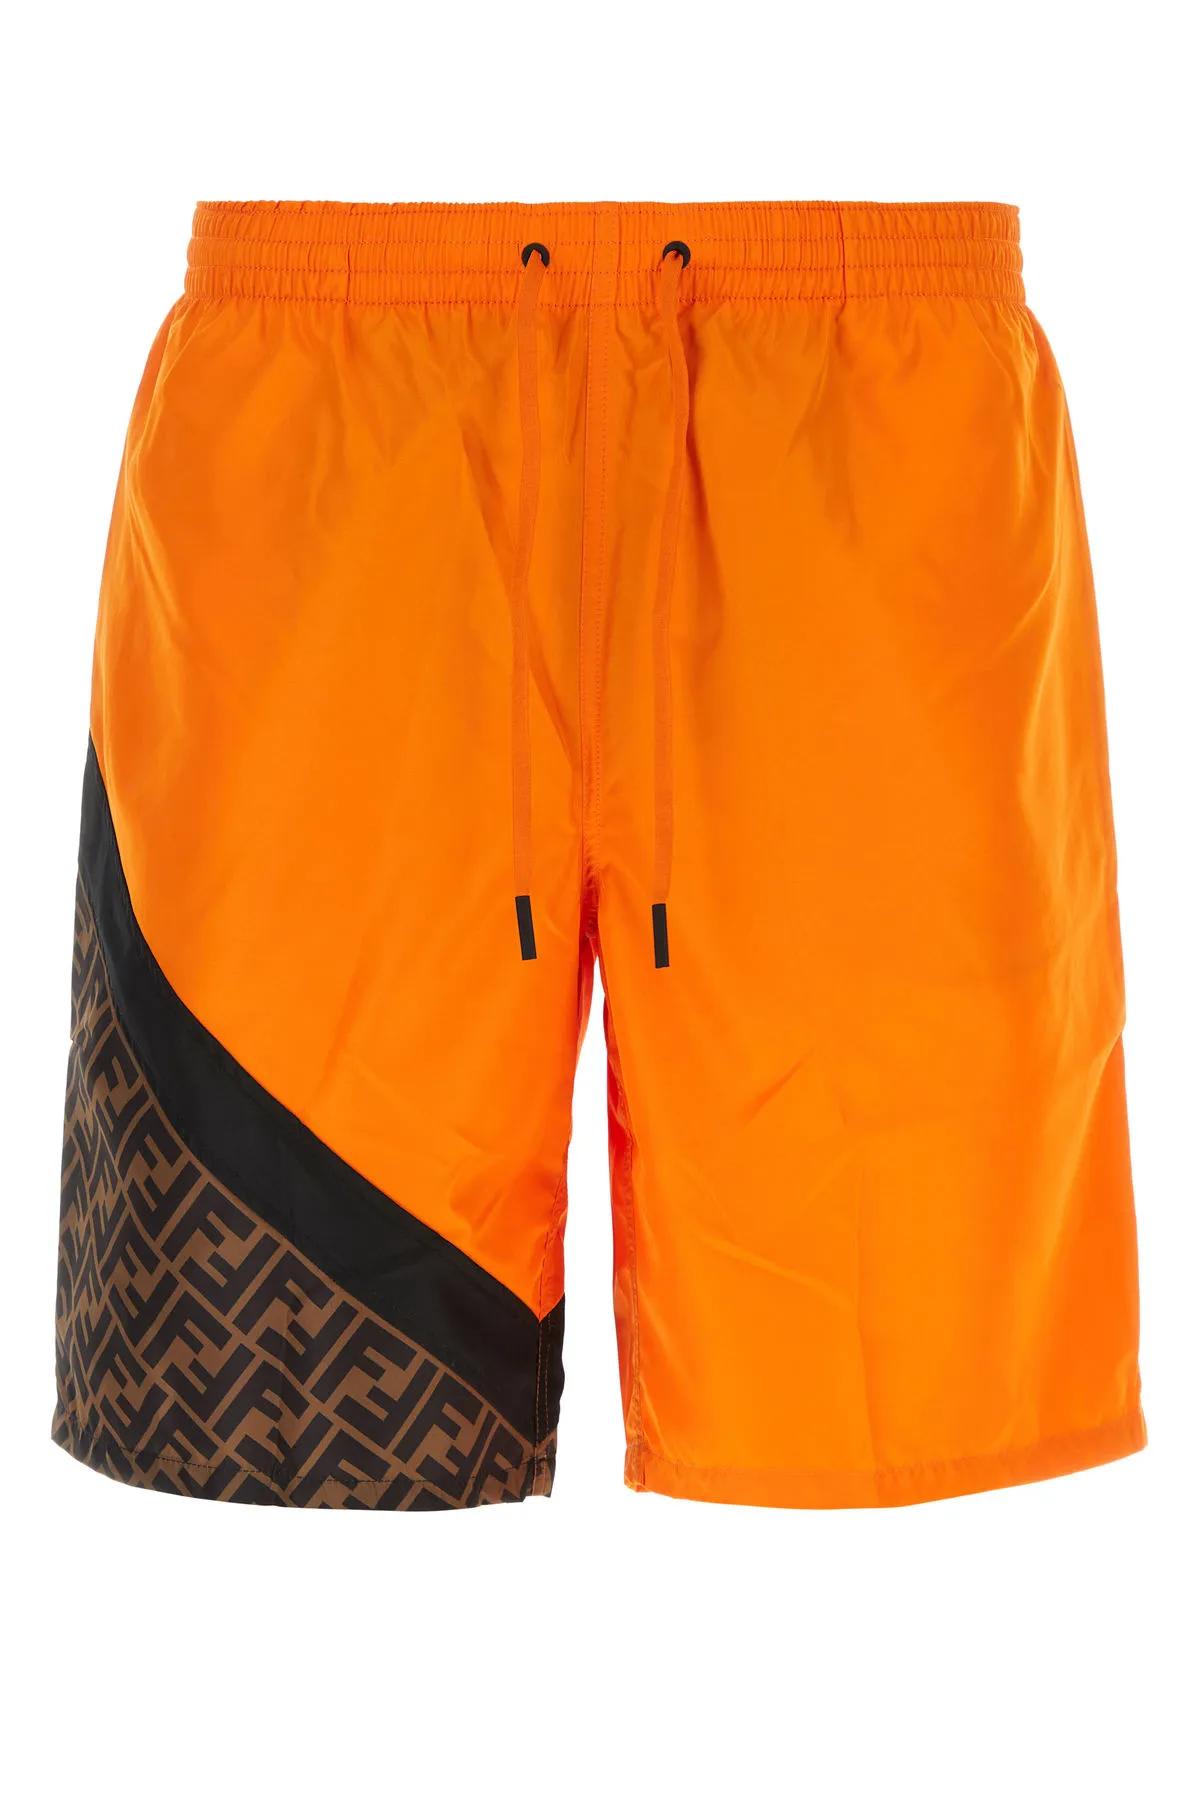 Fendi Orange Polyester Swimming Shorts